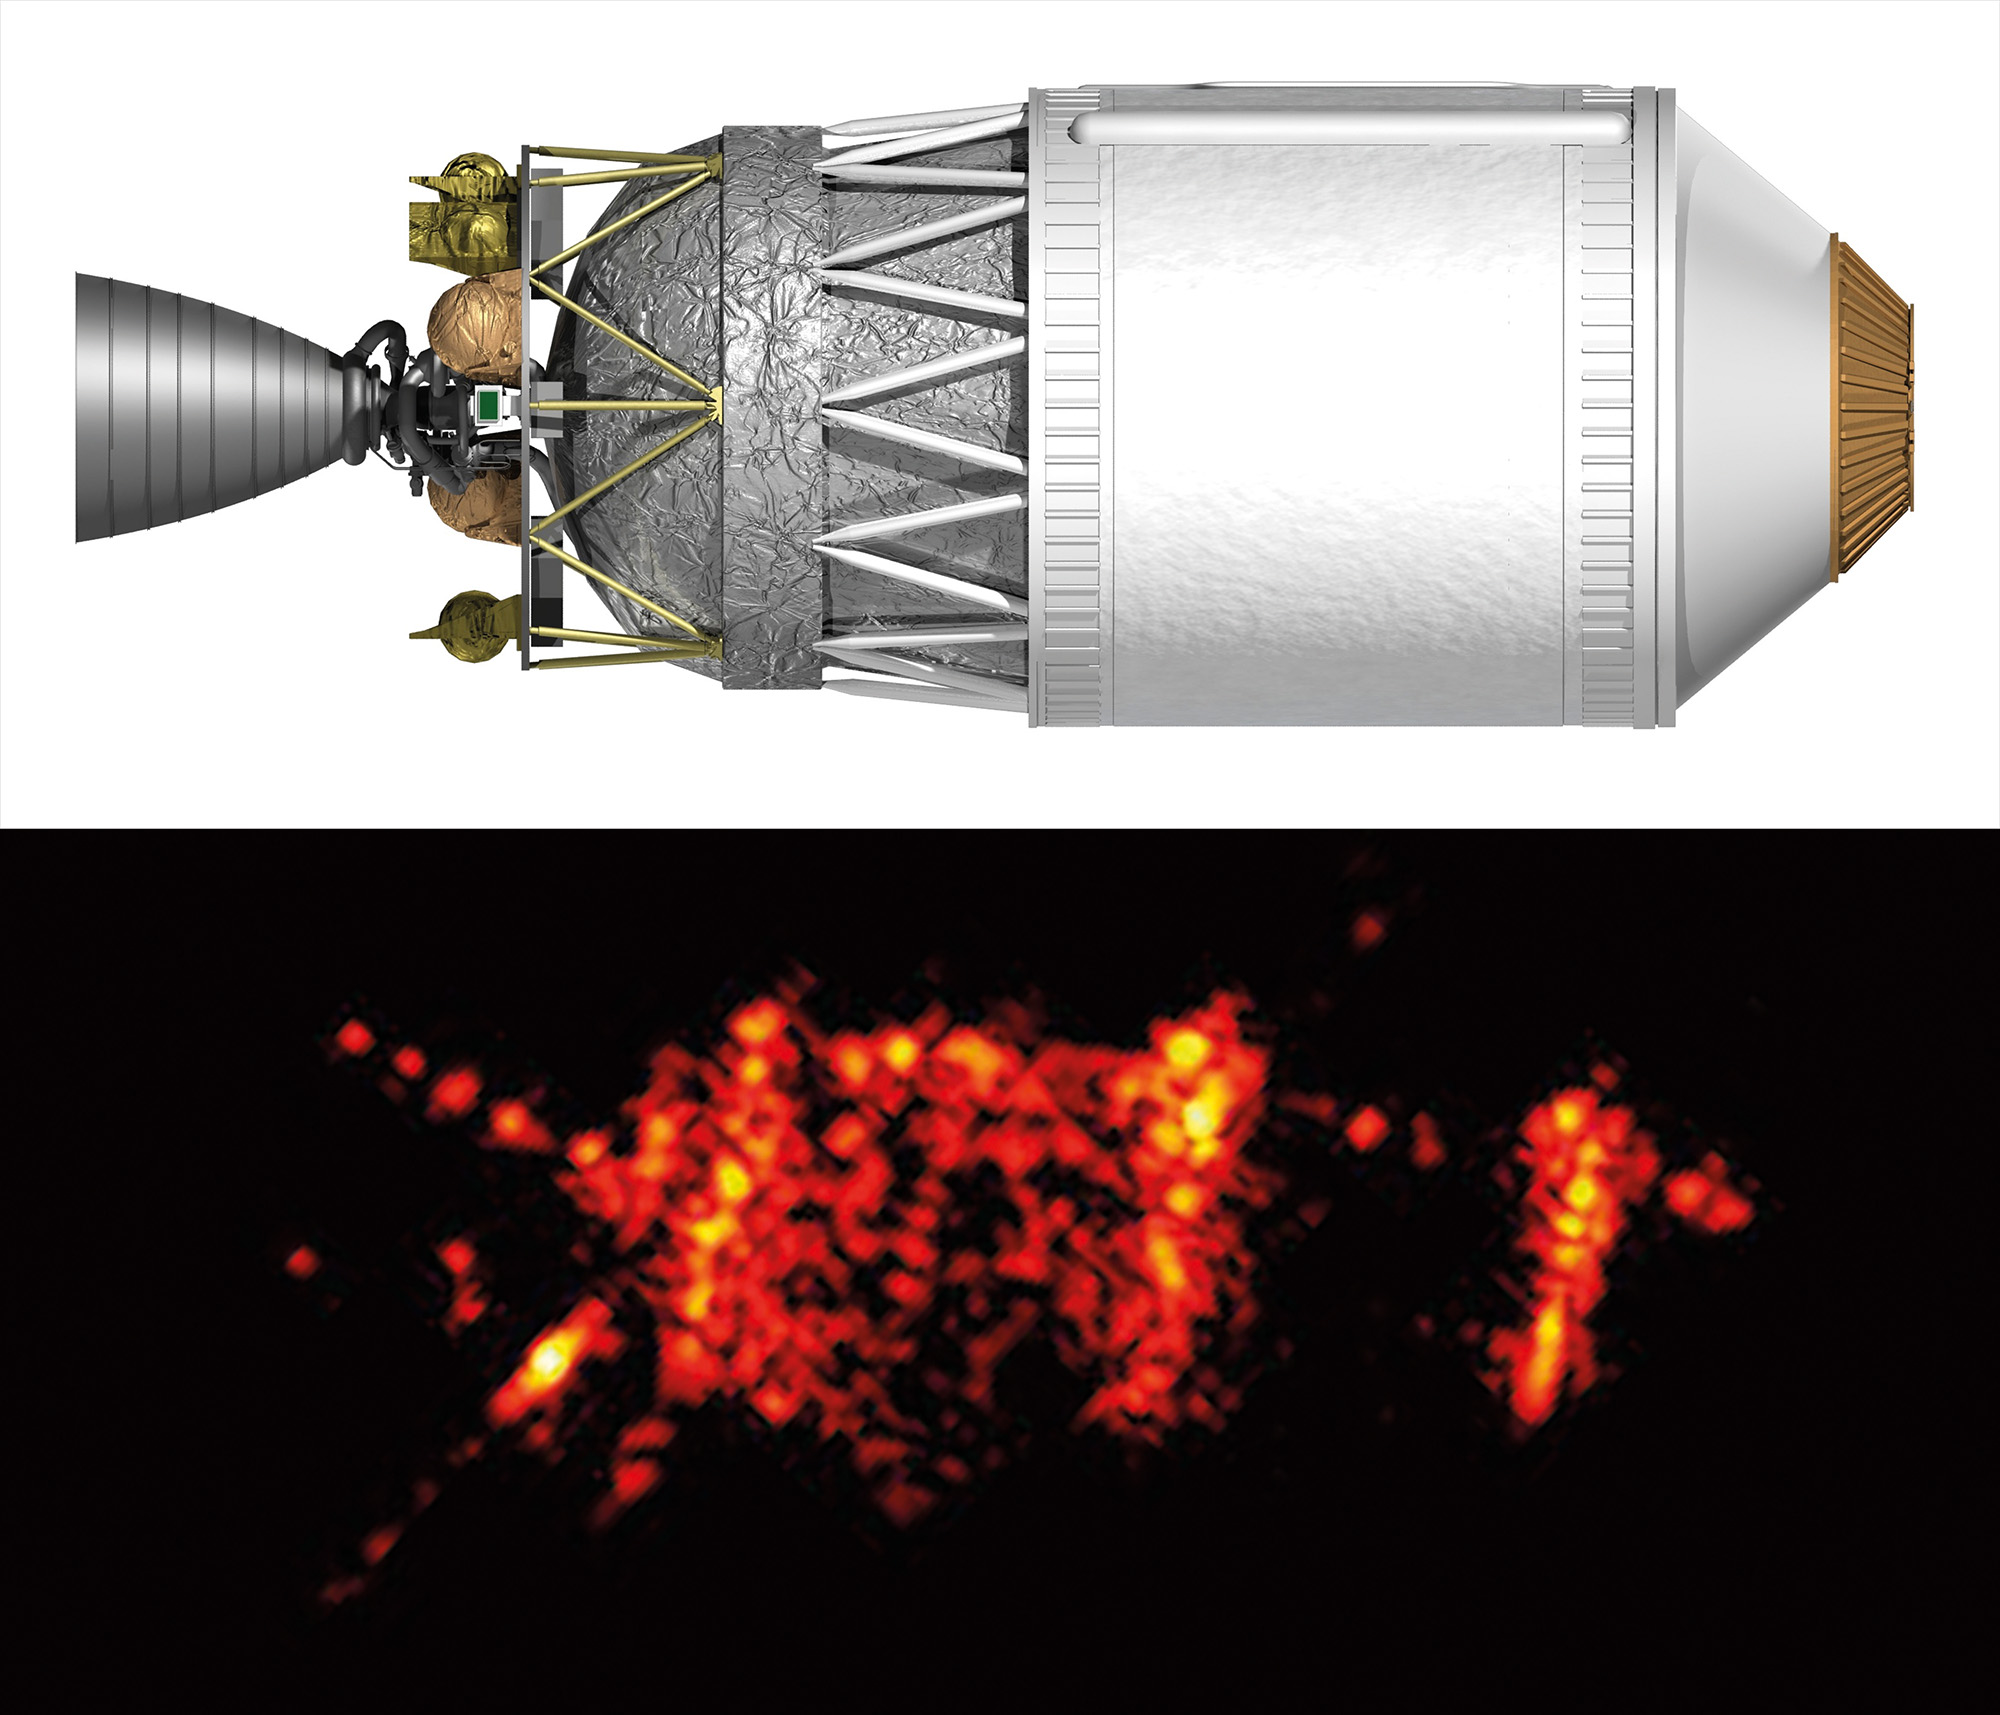 Analyse einer japanischen H-IIA Raketenoberstufe.